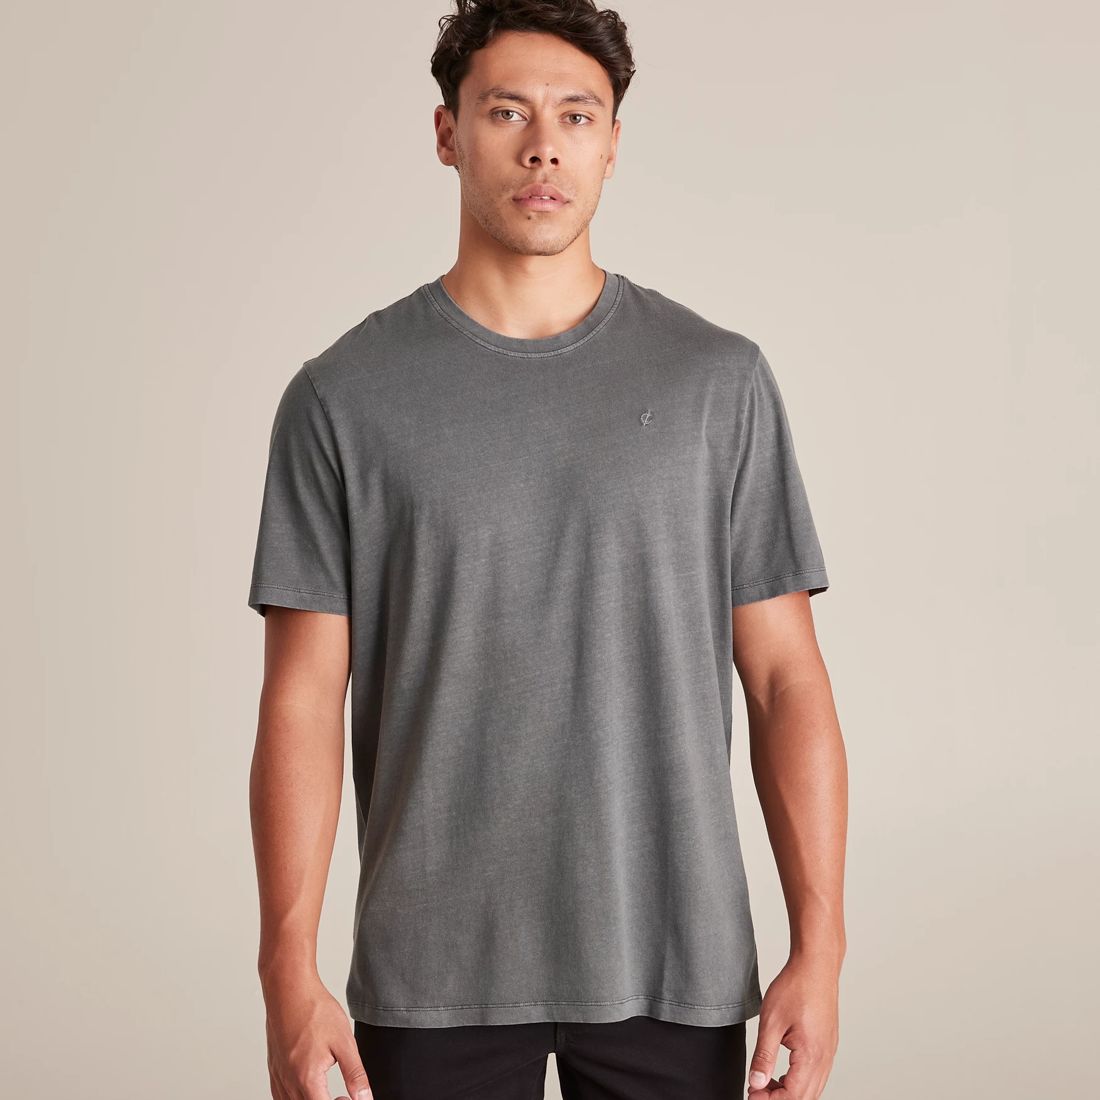 Commons Core T-Shirt | Target Australia